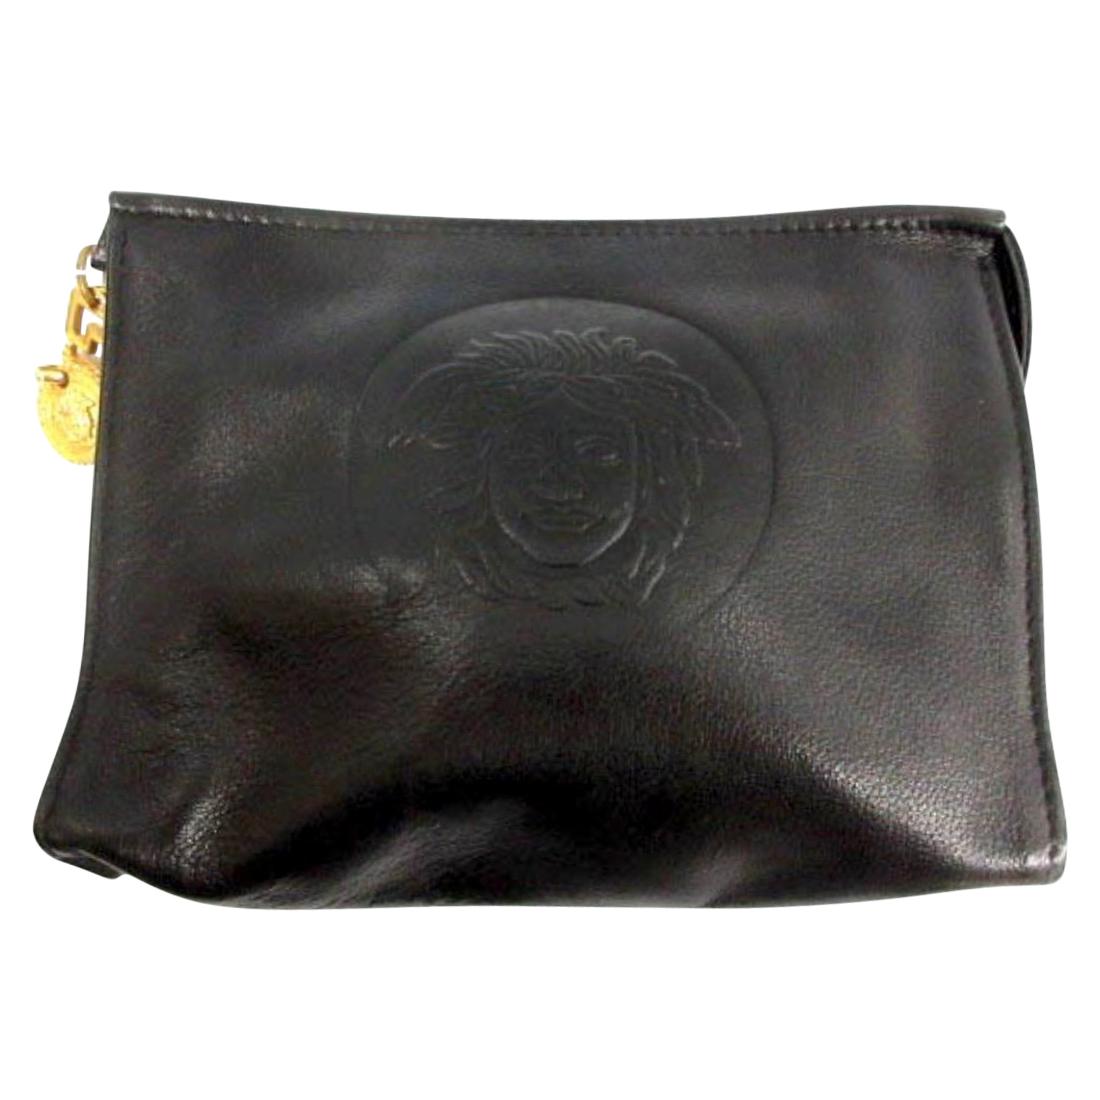 Vintage Gianni Versace black leather clutch purse, pouch, case bag with medusa.